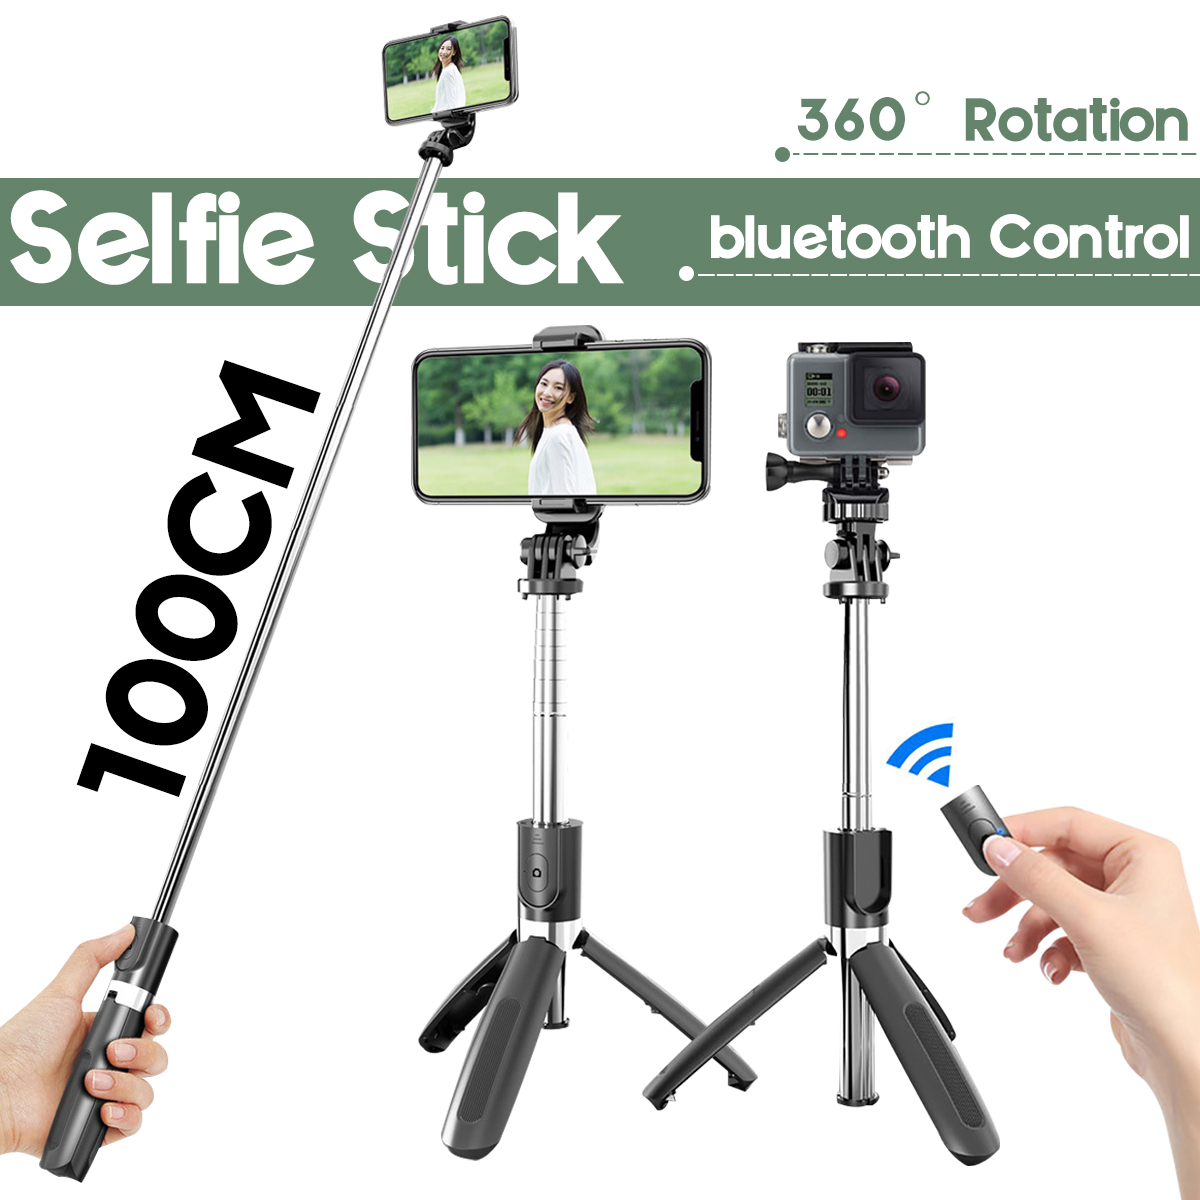 bluetooth-Control-360deg-Rotation-Stable-Tripod-Selfie-Stick-Wireless-Remote-Shutter-Multi-angle-Pro-1824451-1